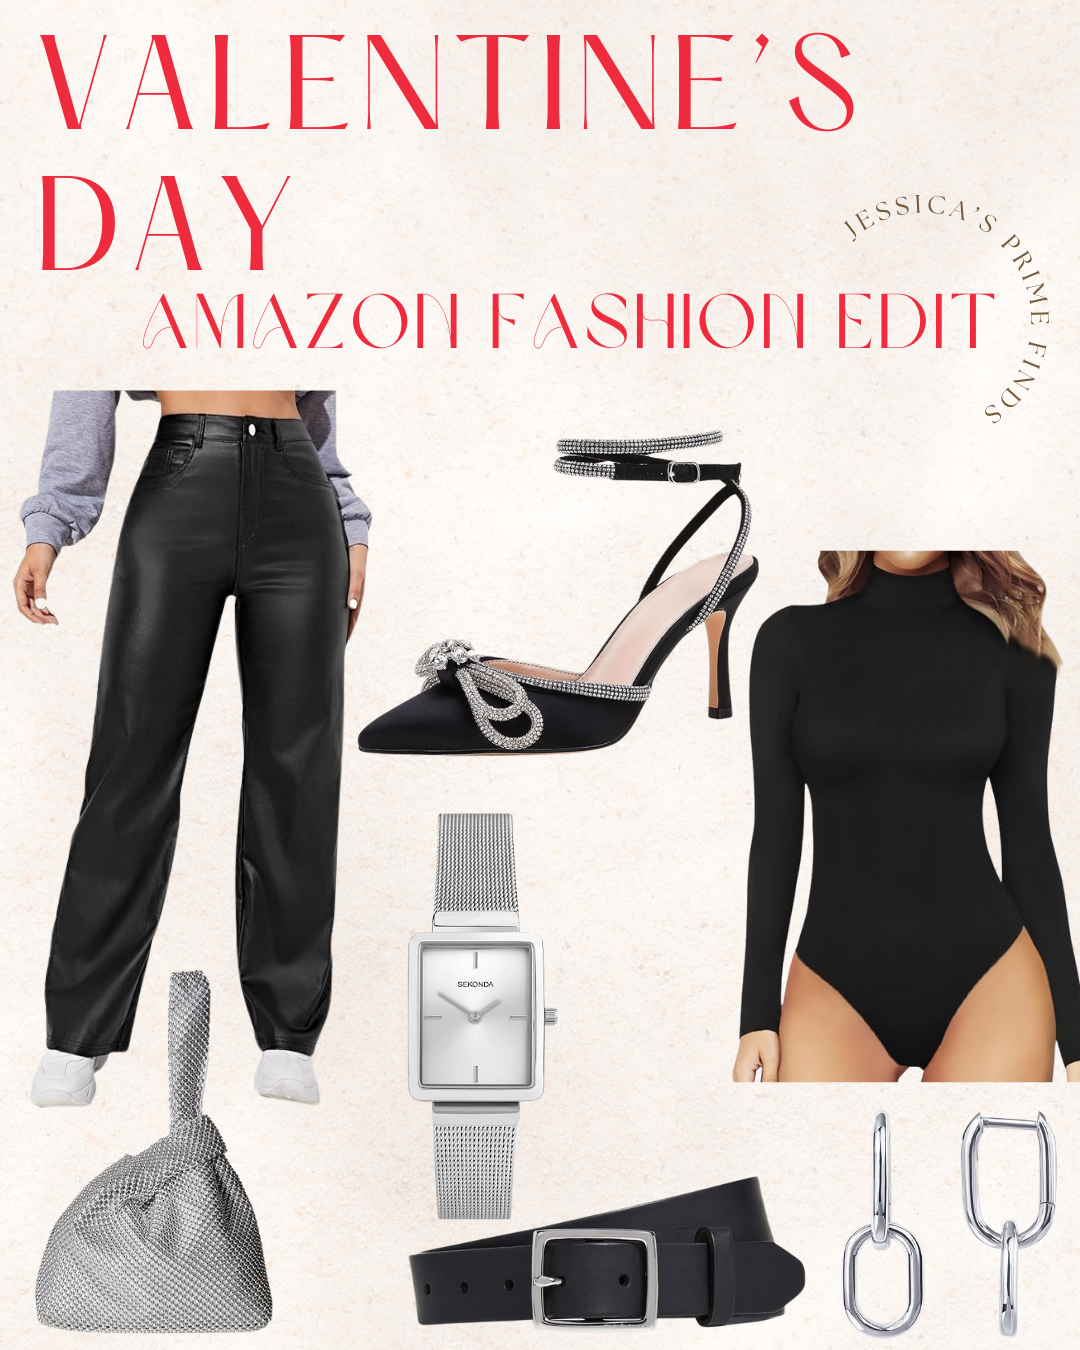 Valentine's Day Fashion Edit Amazon Fashion Neutral Colors Sequins Sparkles